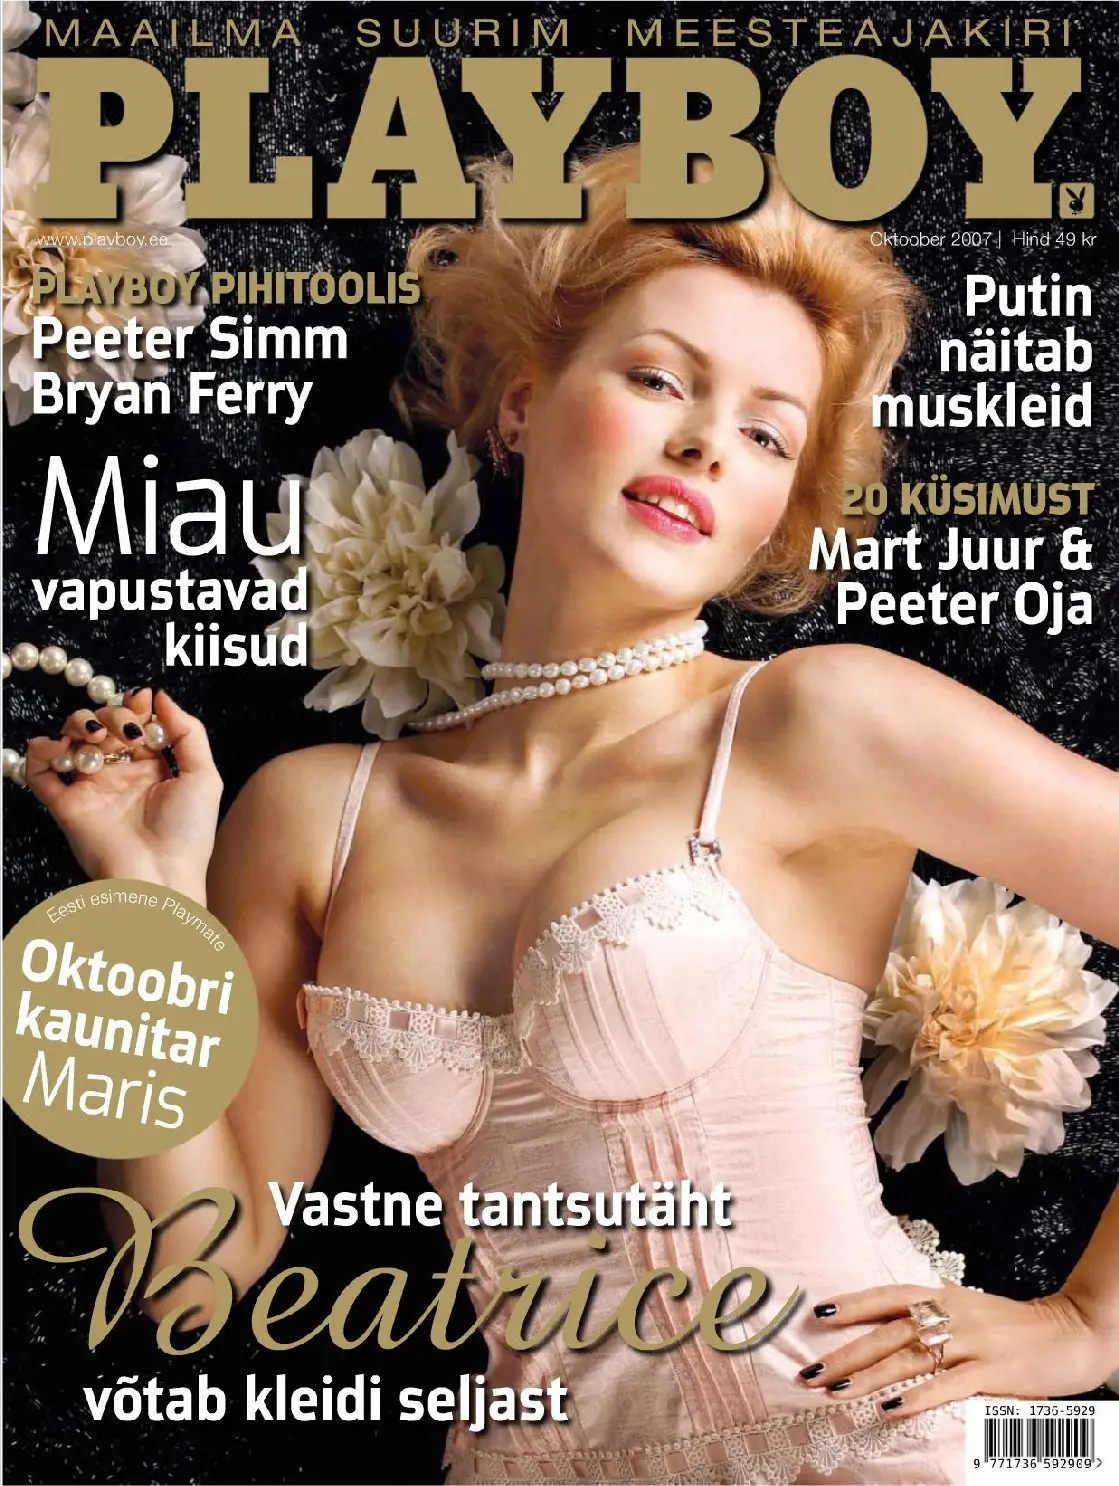 Old Playboy Magazine